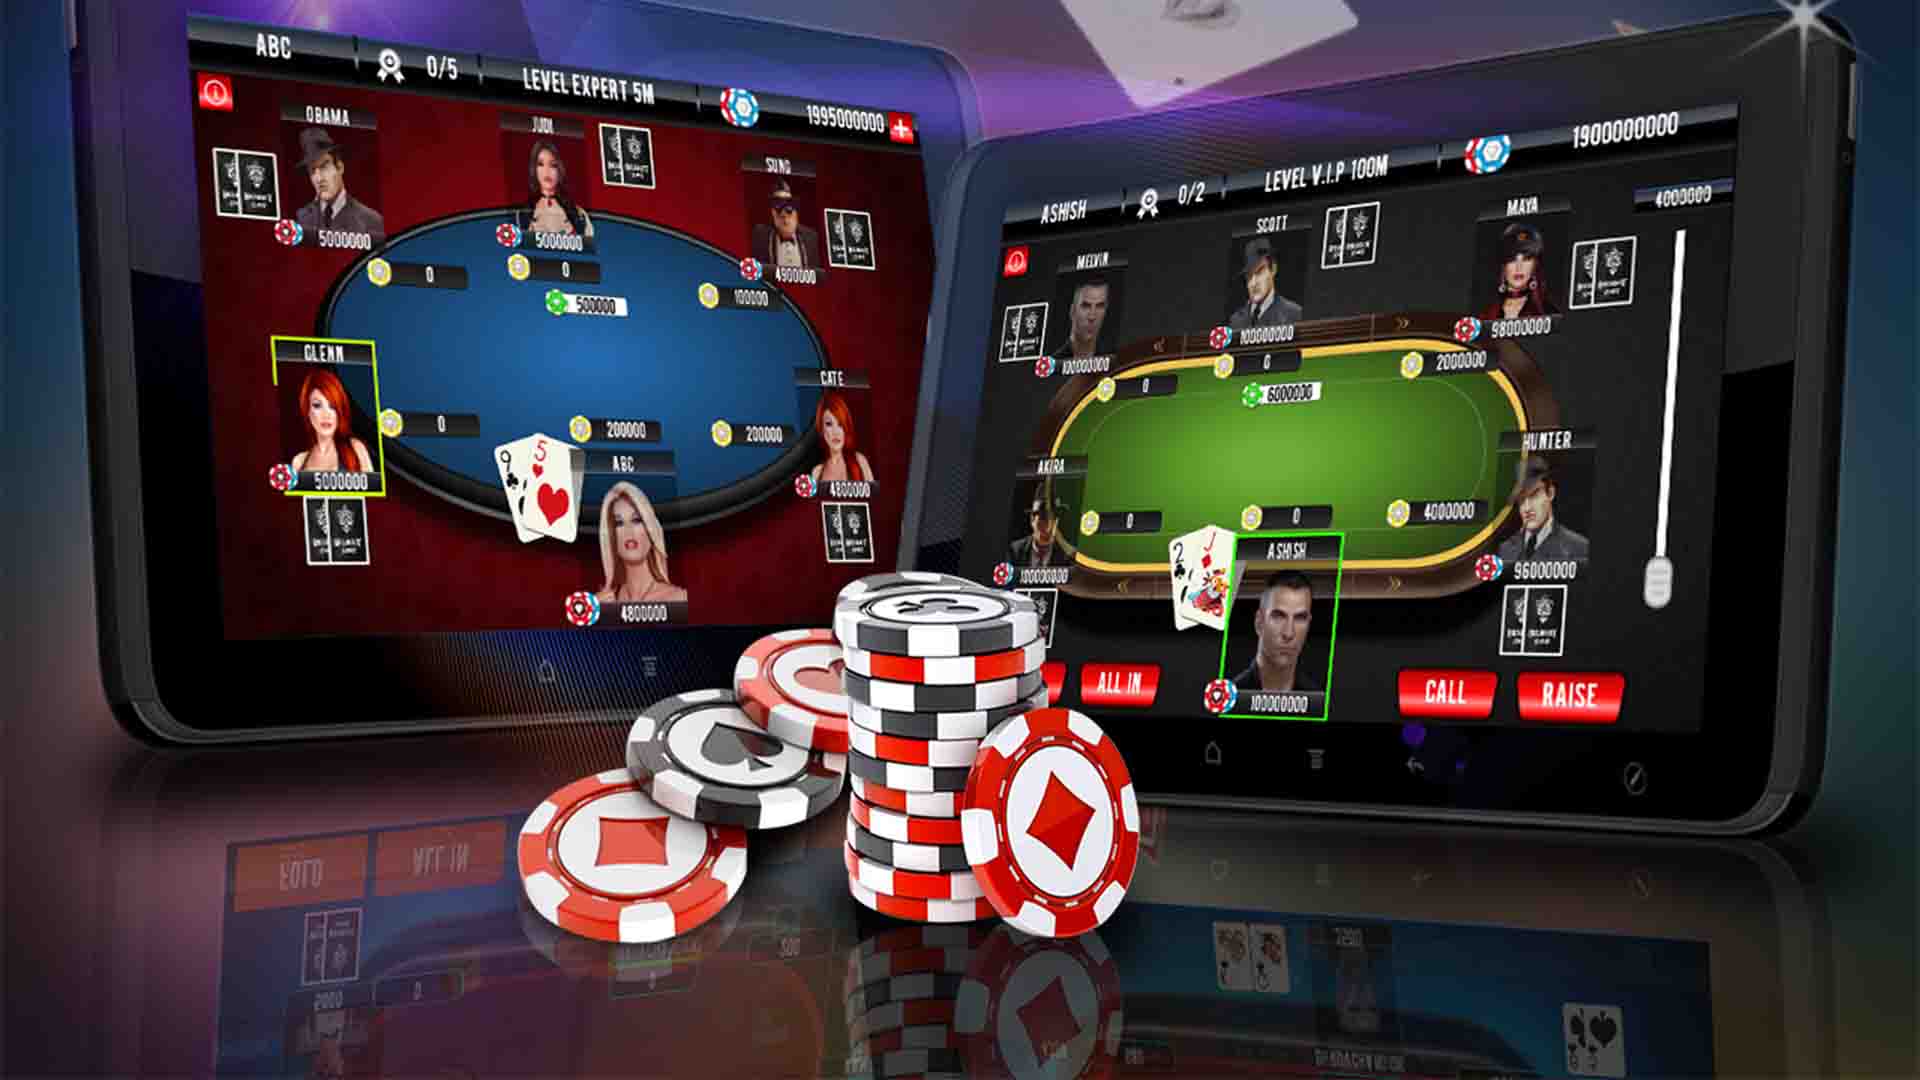 Best Online Poker Games